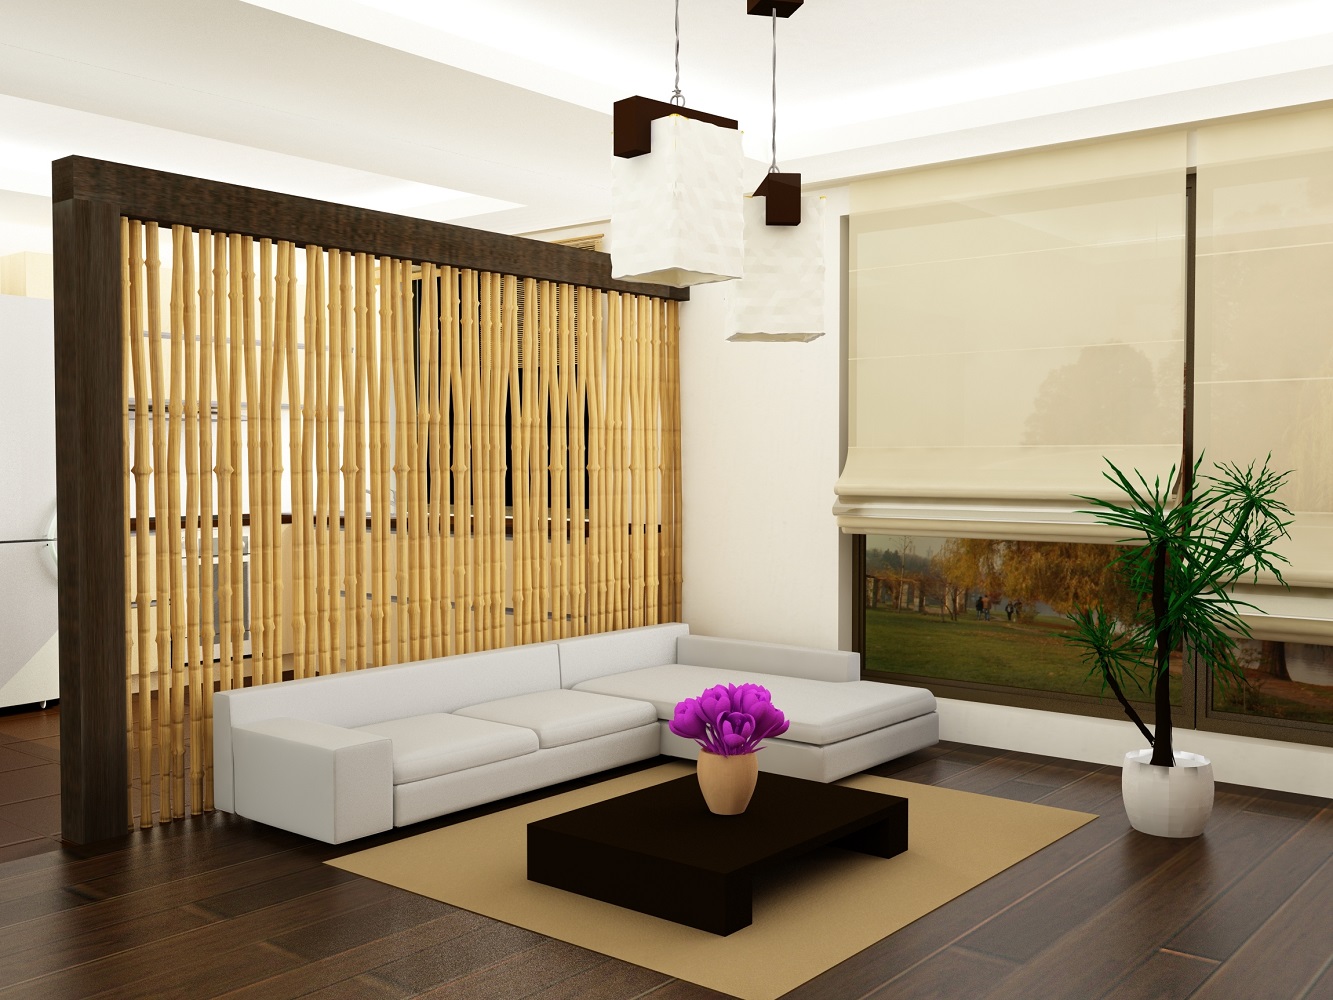 žaluzie s bambusem v interiéru místnosti